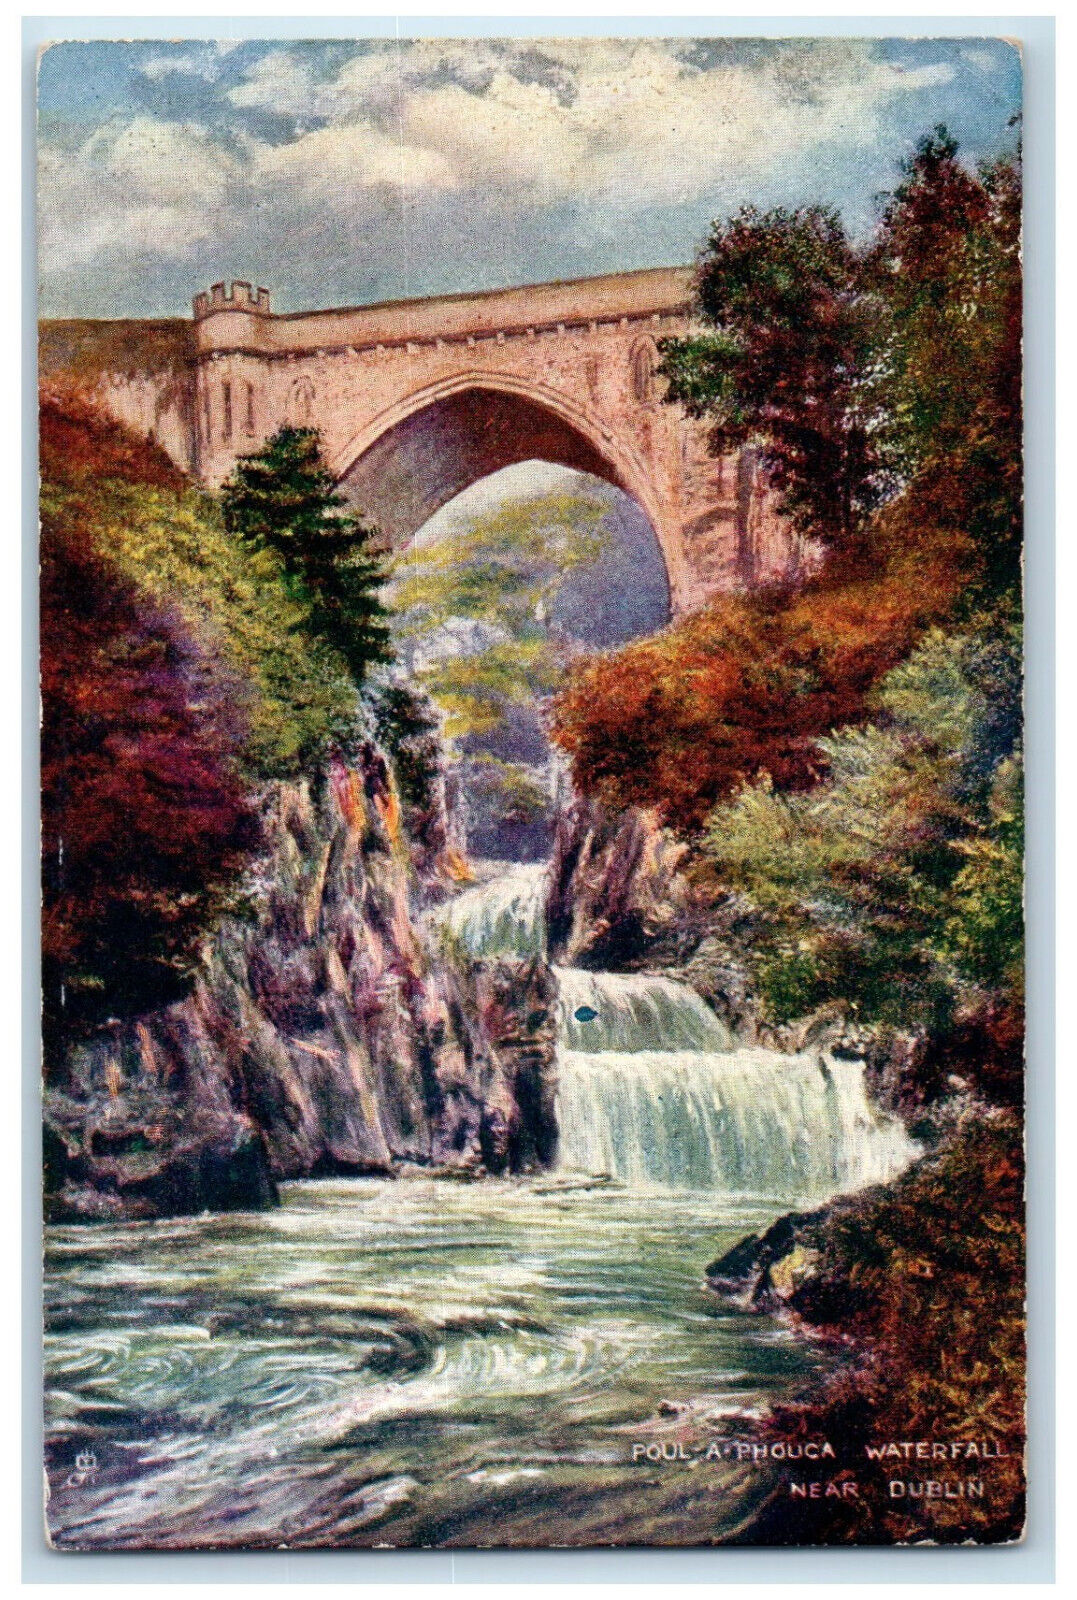 c1910 Poul-a-phouca Waterfall Near Dublin Ireland Oilette Tuck Art Postcard